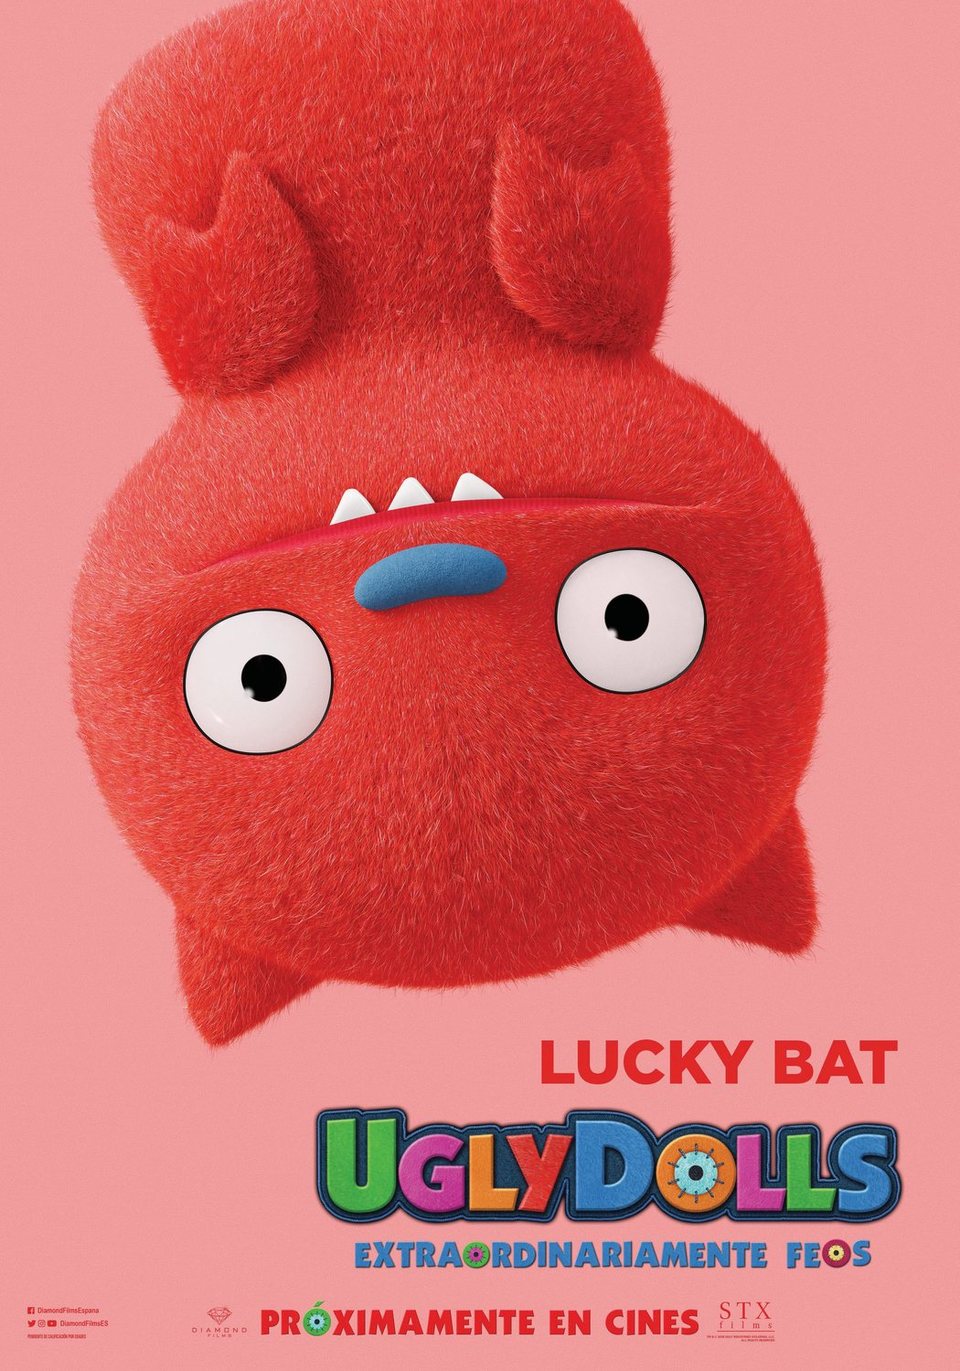 Poster of UglyDolls - PÓSTER LUCKY BAT